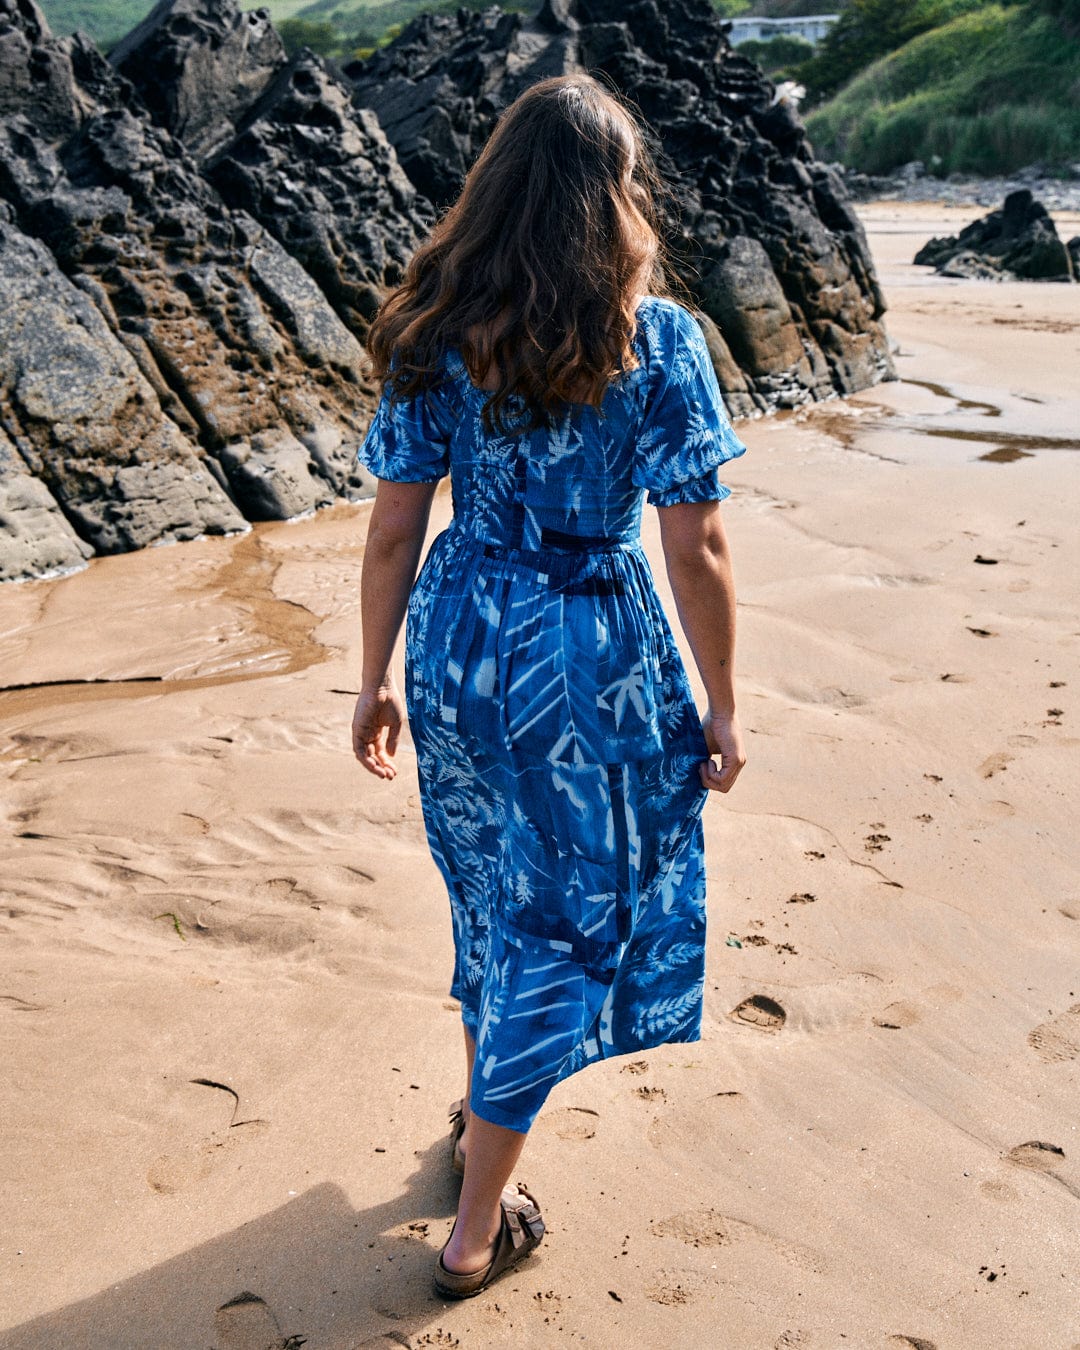 A person with long hair, wearing a Larran Cyanotype - Midi Woven Dress - Blue from Saltrock, walks on a sandy beach toward rocky formations.